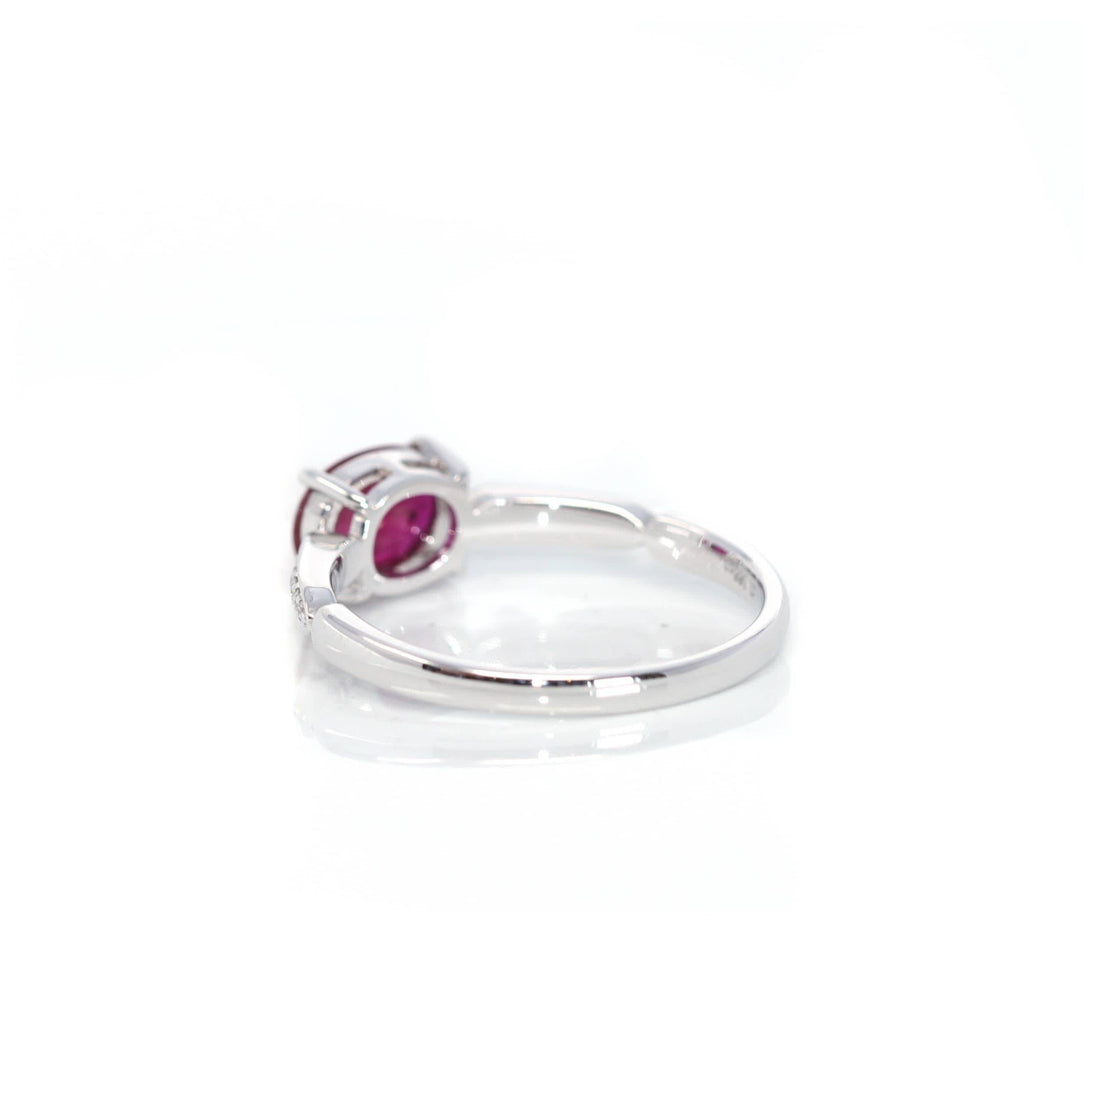 Baikalla Jewelry Gold Ruby Ring 18k White Gold Natural Oval Ruby Diamond Anniversary Ring